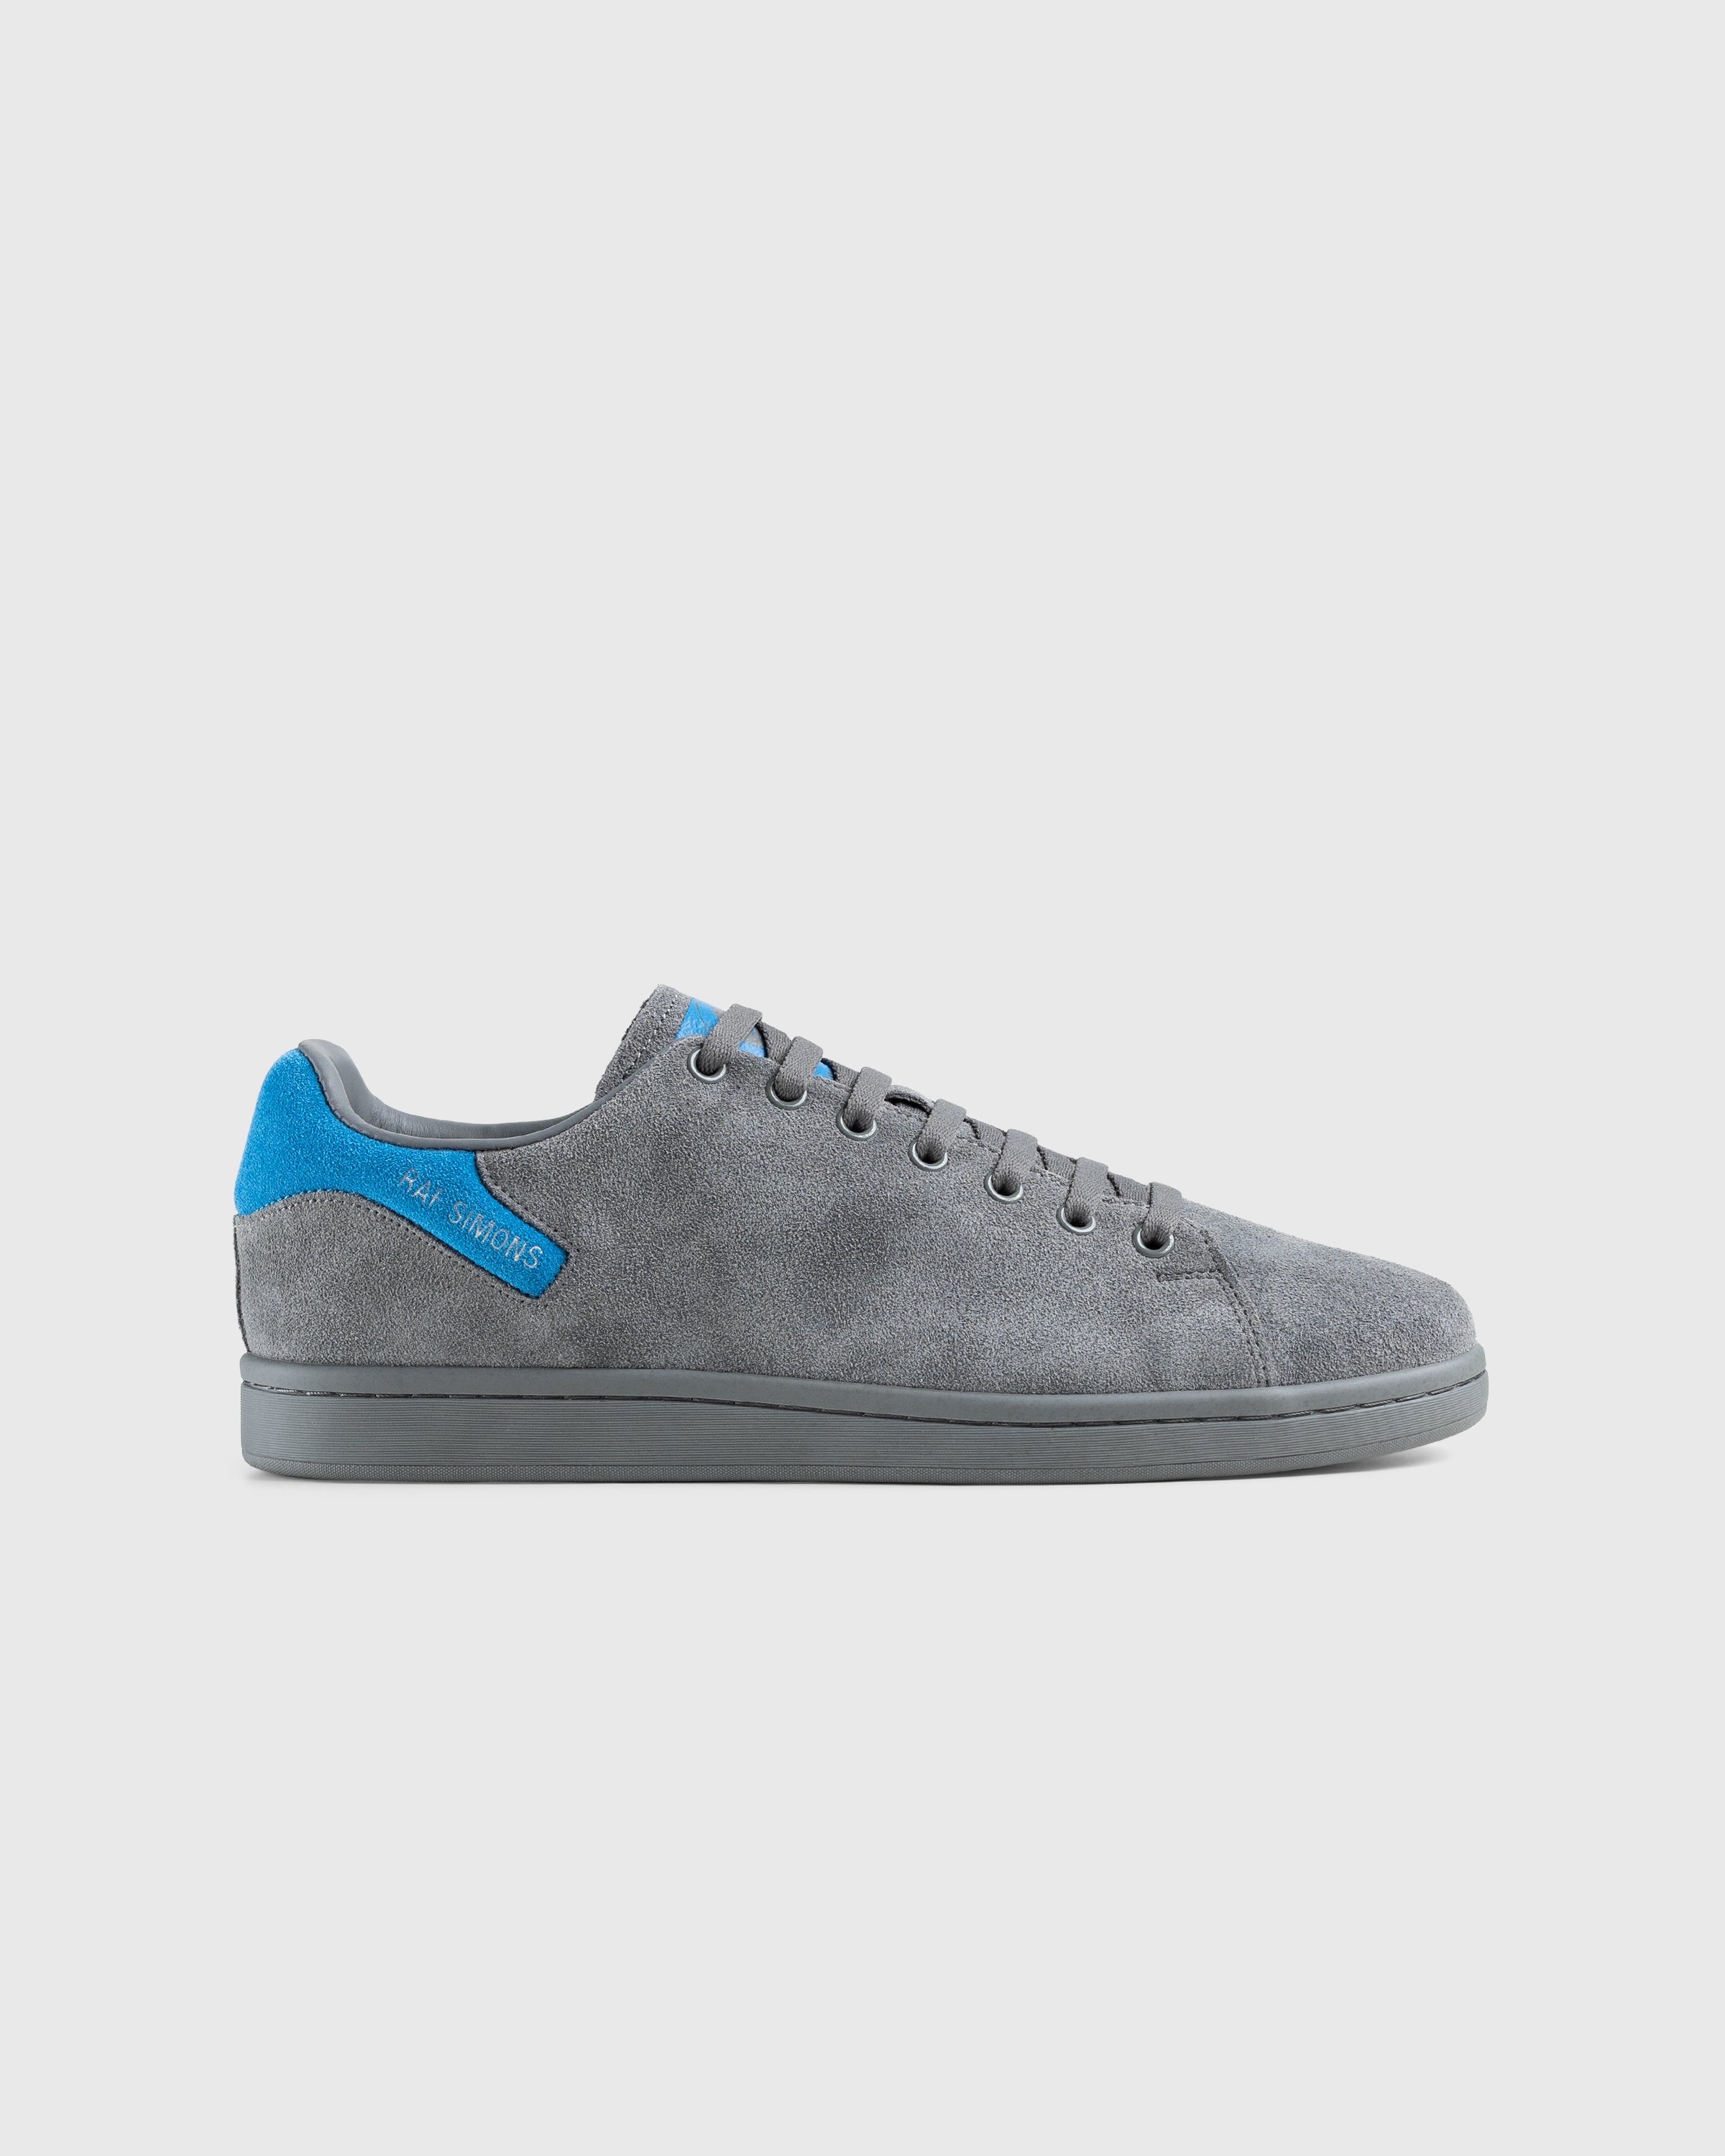 Raf Simons - Orion Grey - Footwear - Grey - Image 1